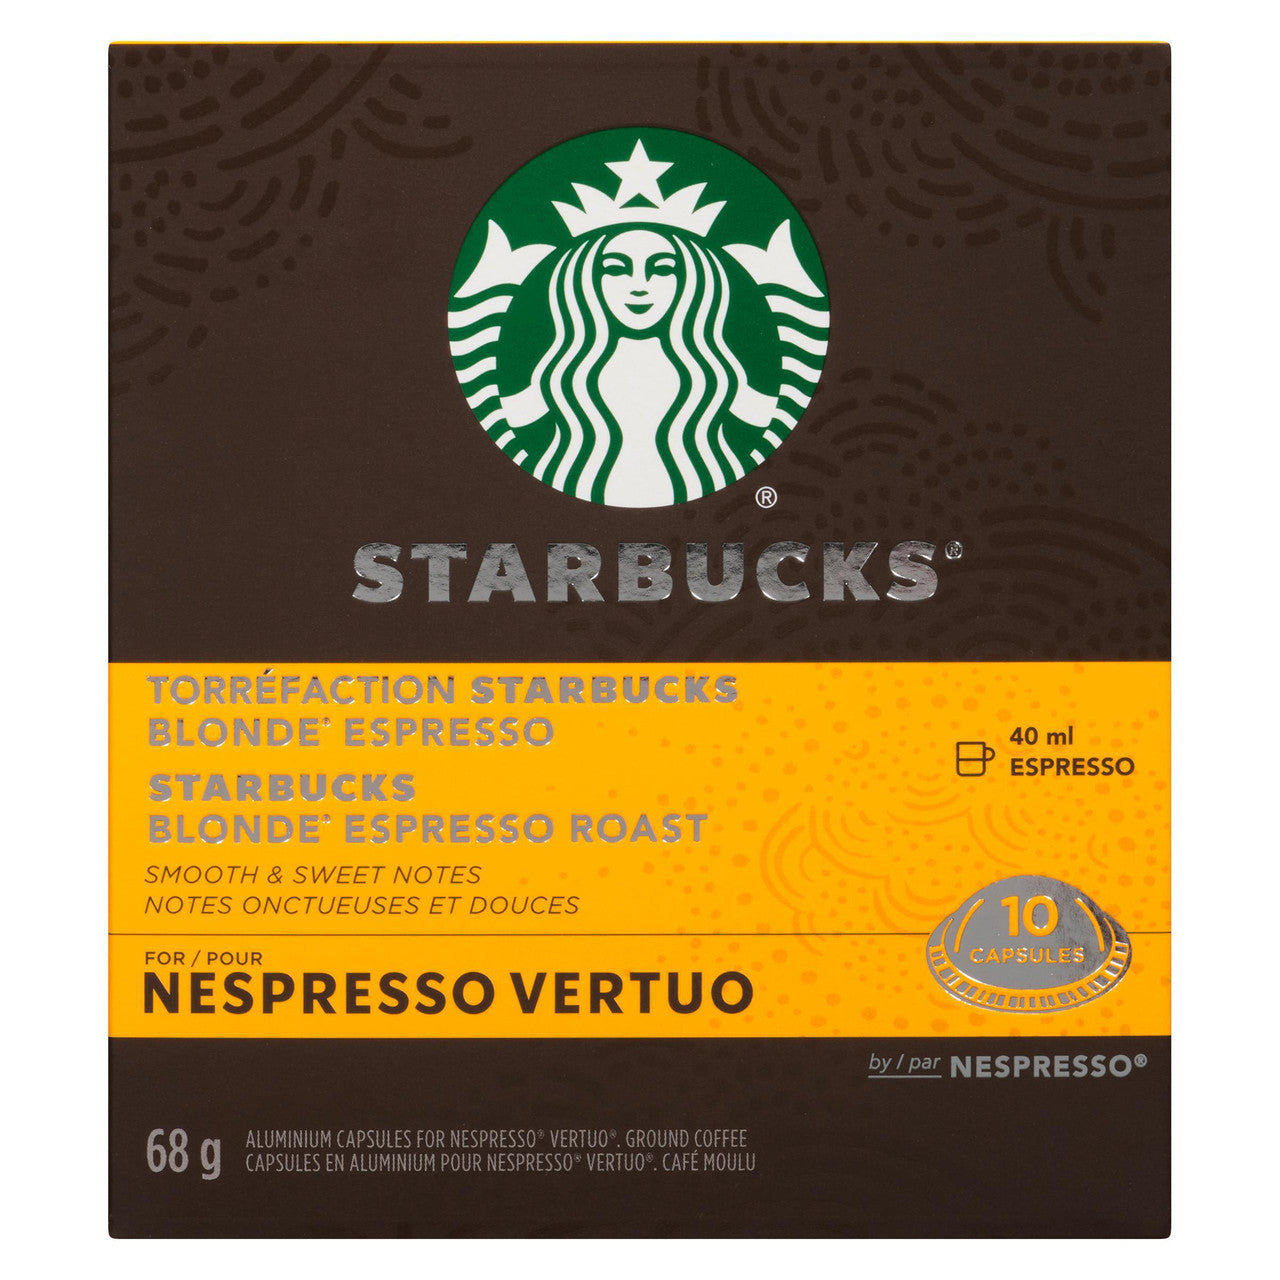 Starbucks Blonde Espresso Roast Coffee, Capsules for Nespresso Vertuo, 10 count, 68g/2.4 oz. Box {Imported from Canada}